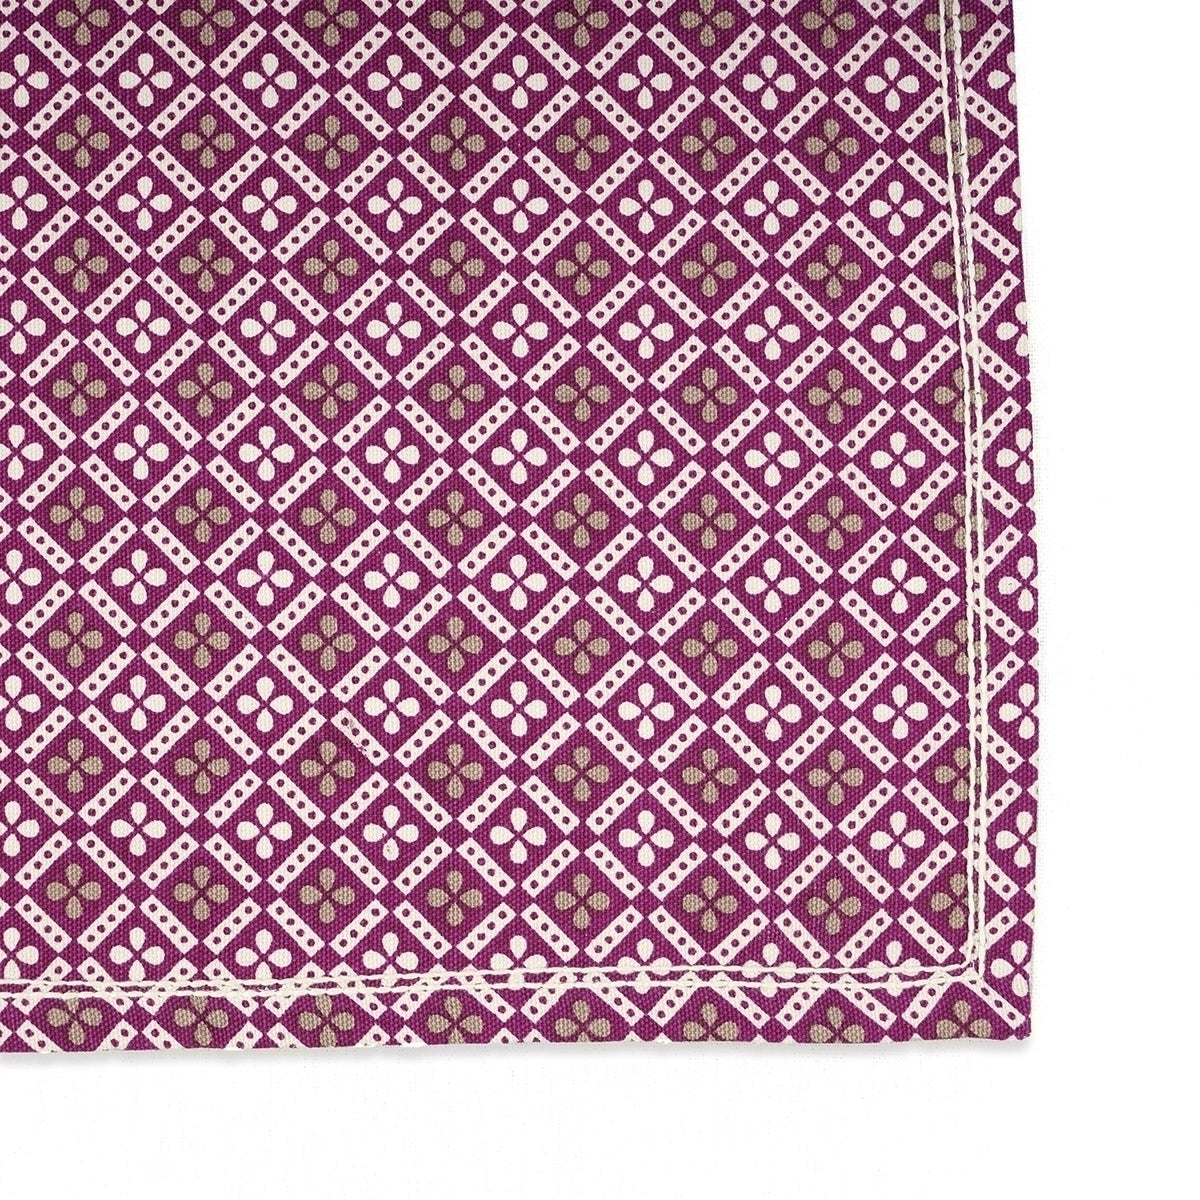 Plum Printed Kitchen Towel, geometrical pattern, 100% cotton, size 20"X28"